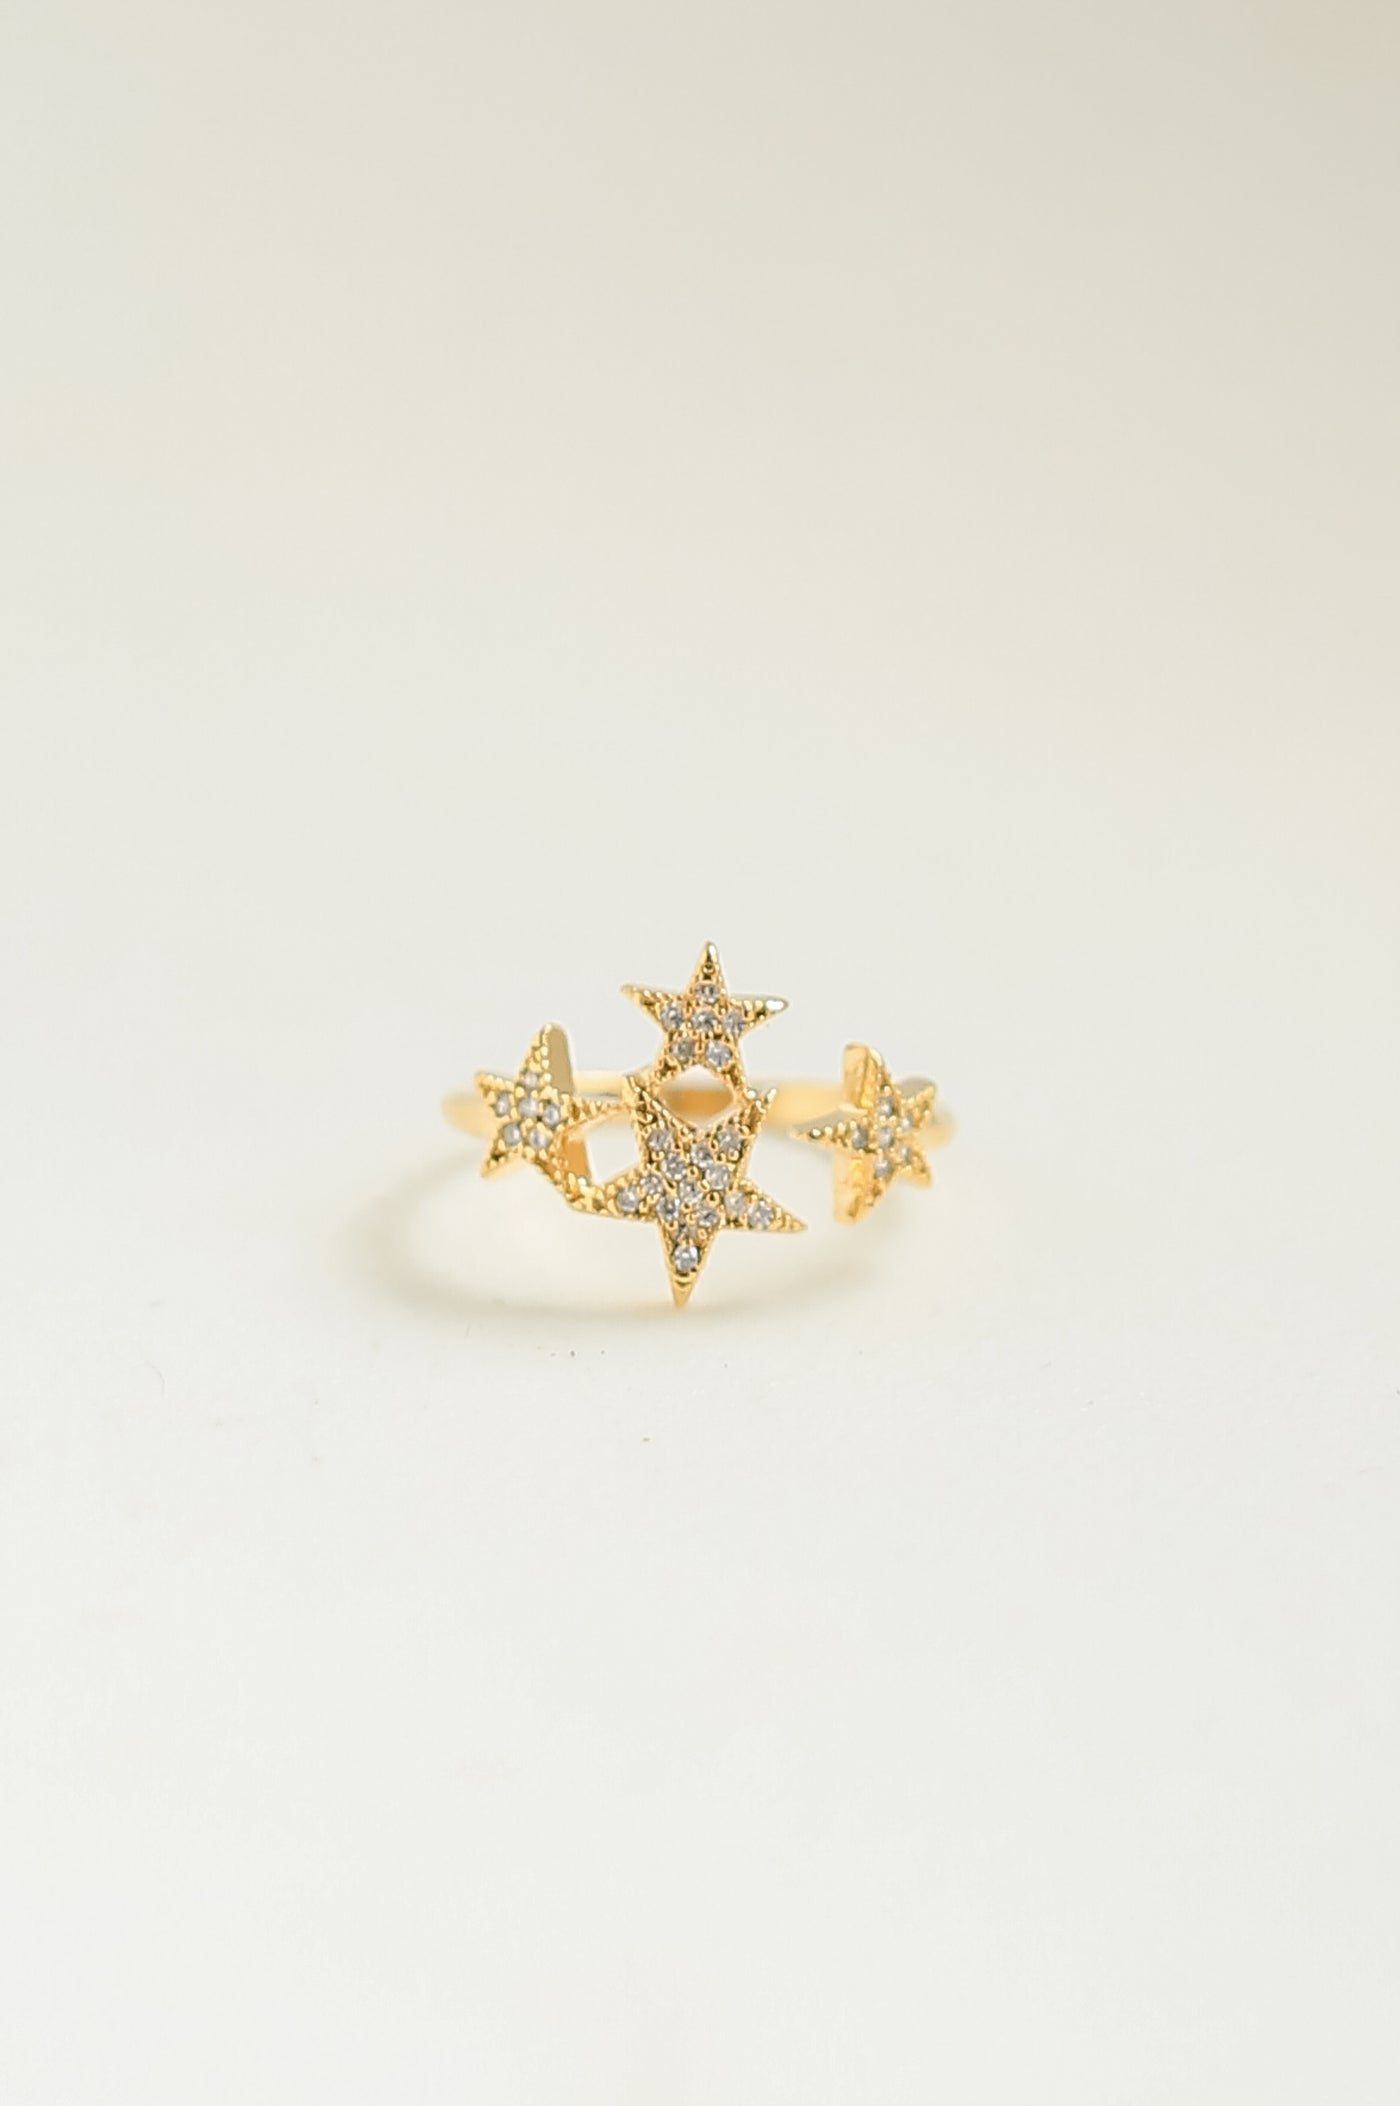 Gold Rhinestone Star Ring close up